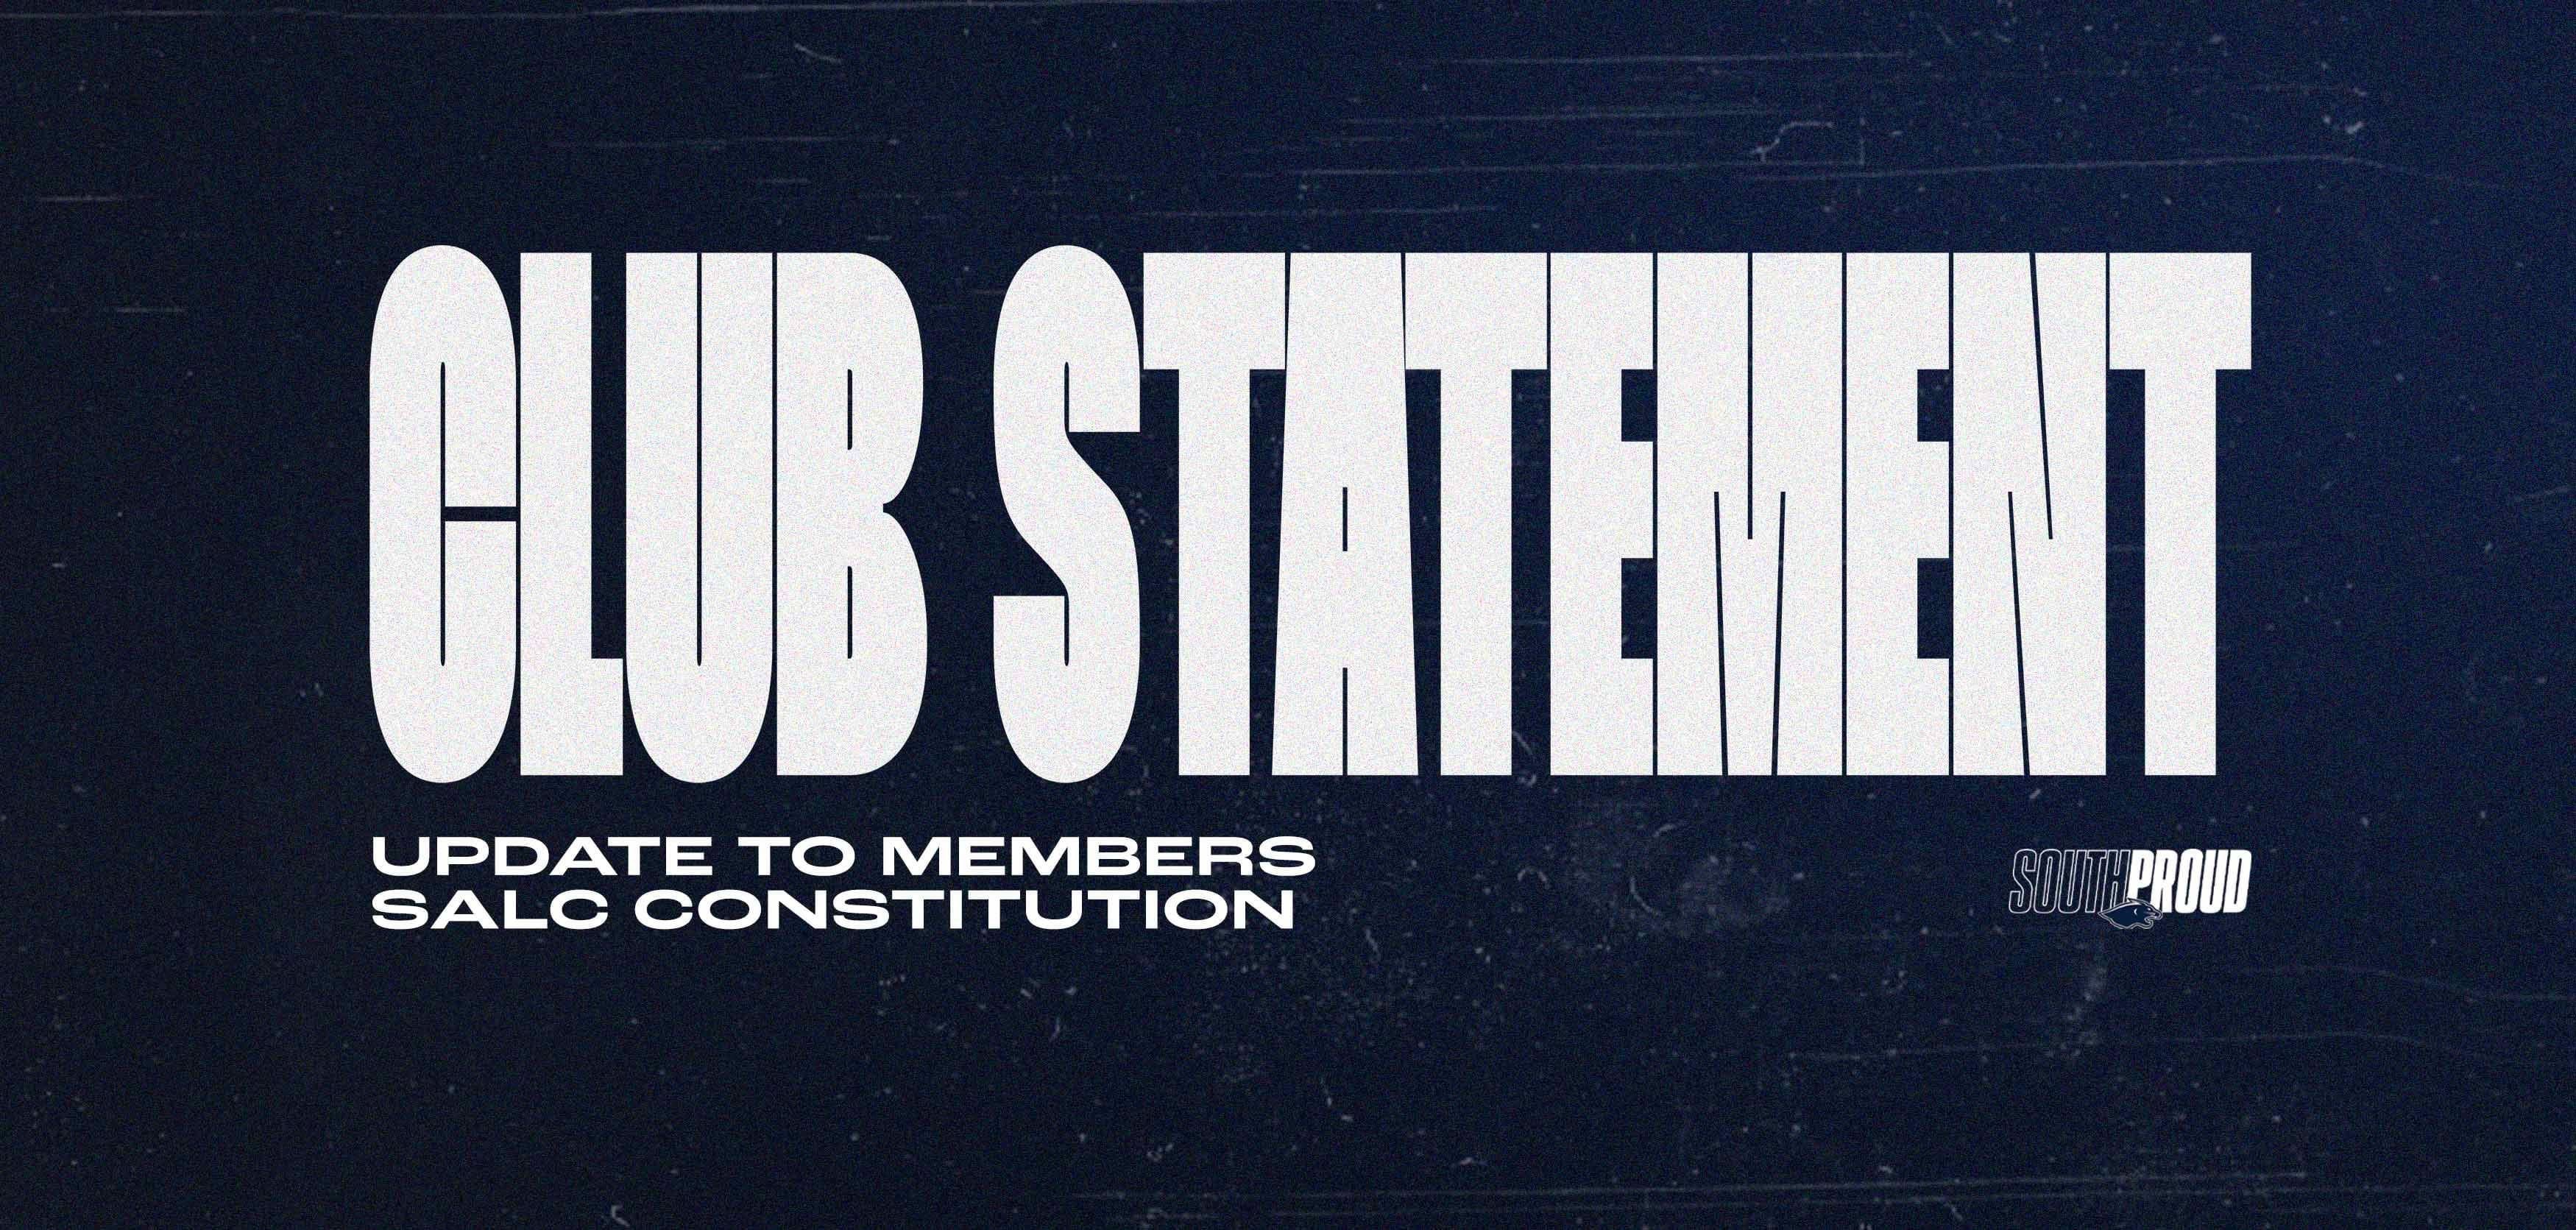 Club Statement - Update to Members SALC Constitution